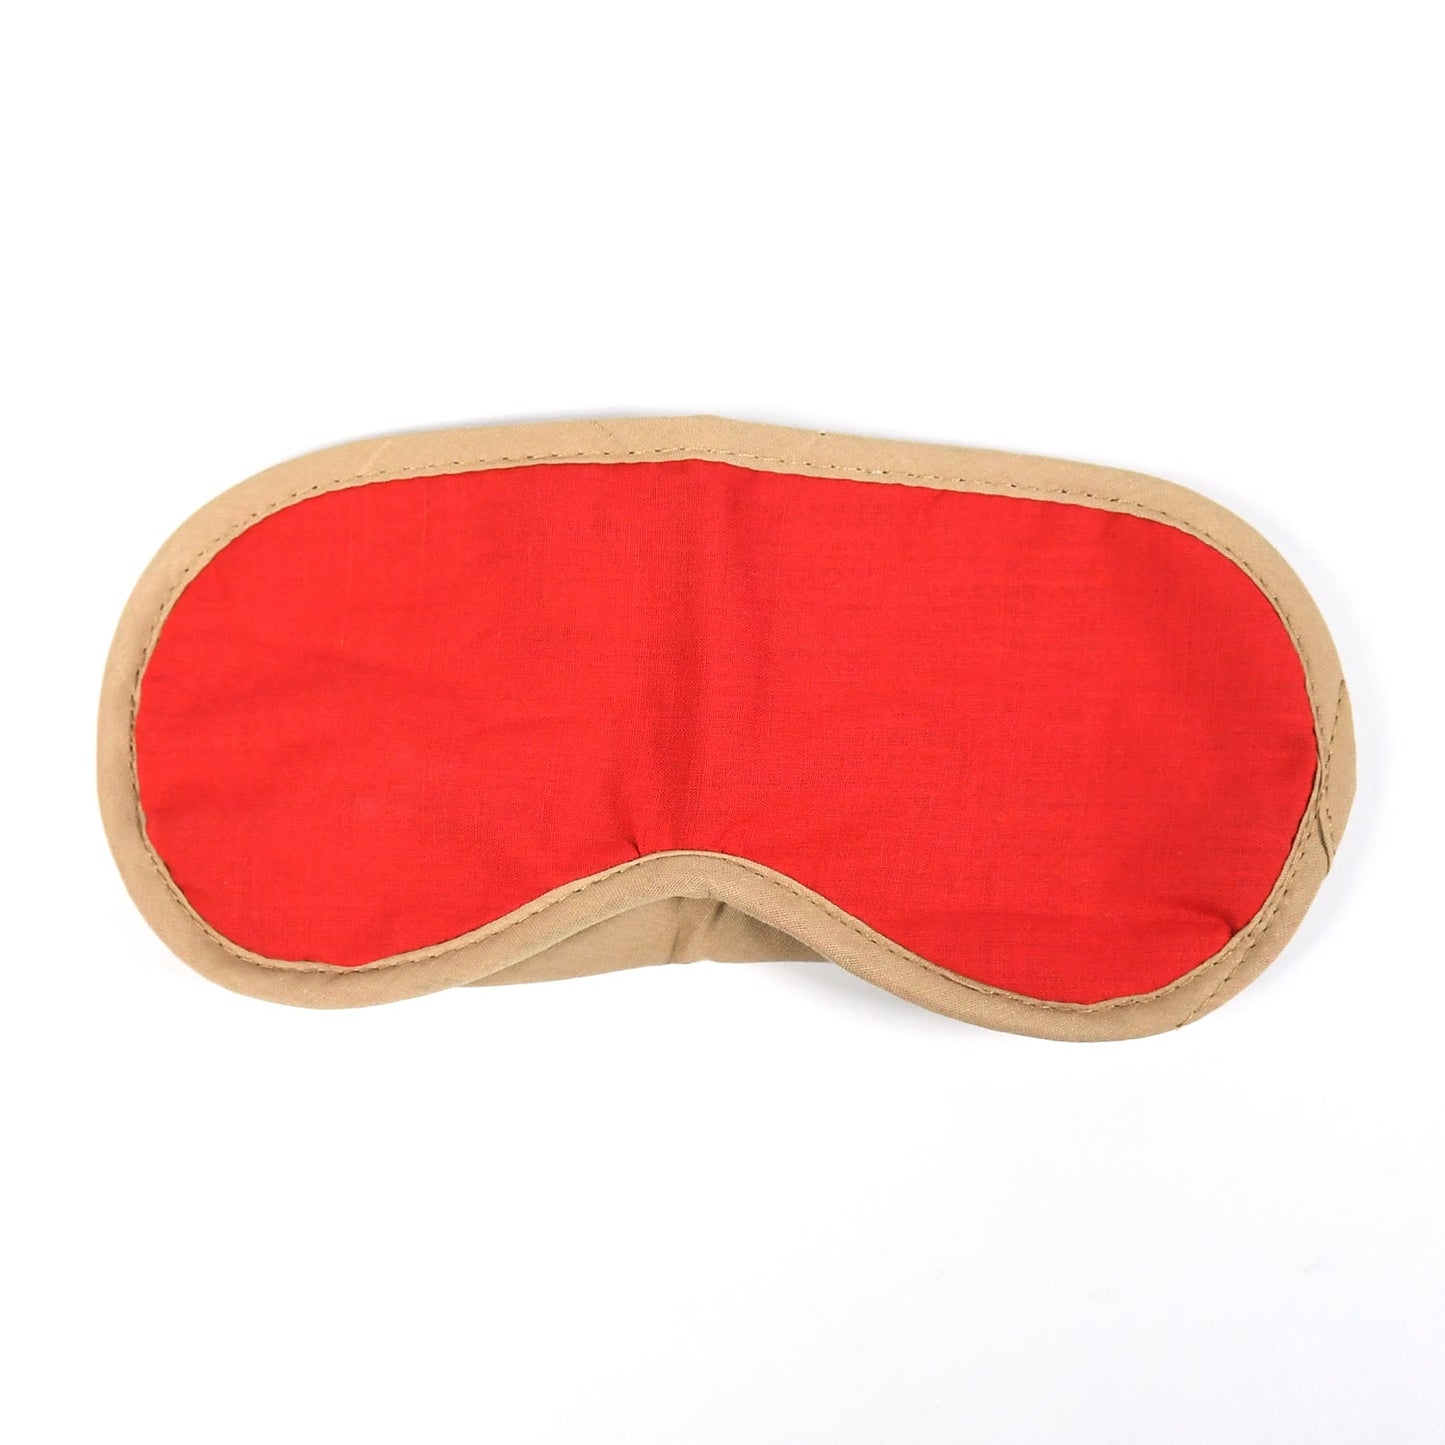 Super Stuff Sleep Eye Mask Comfortable & Super Soft Sleeping Mask for Women, Men & Kid